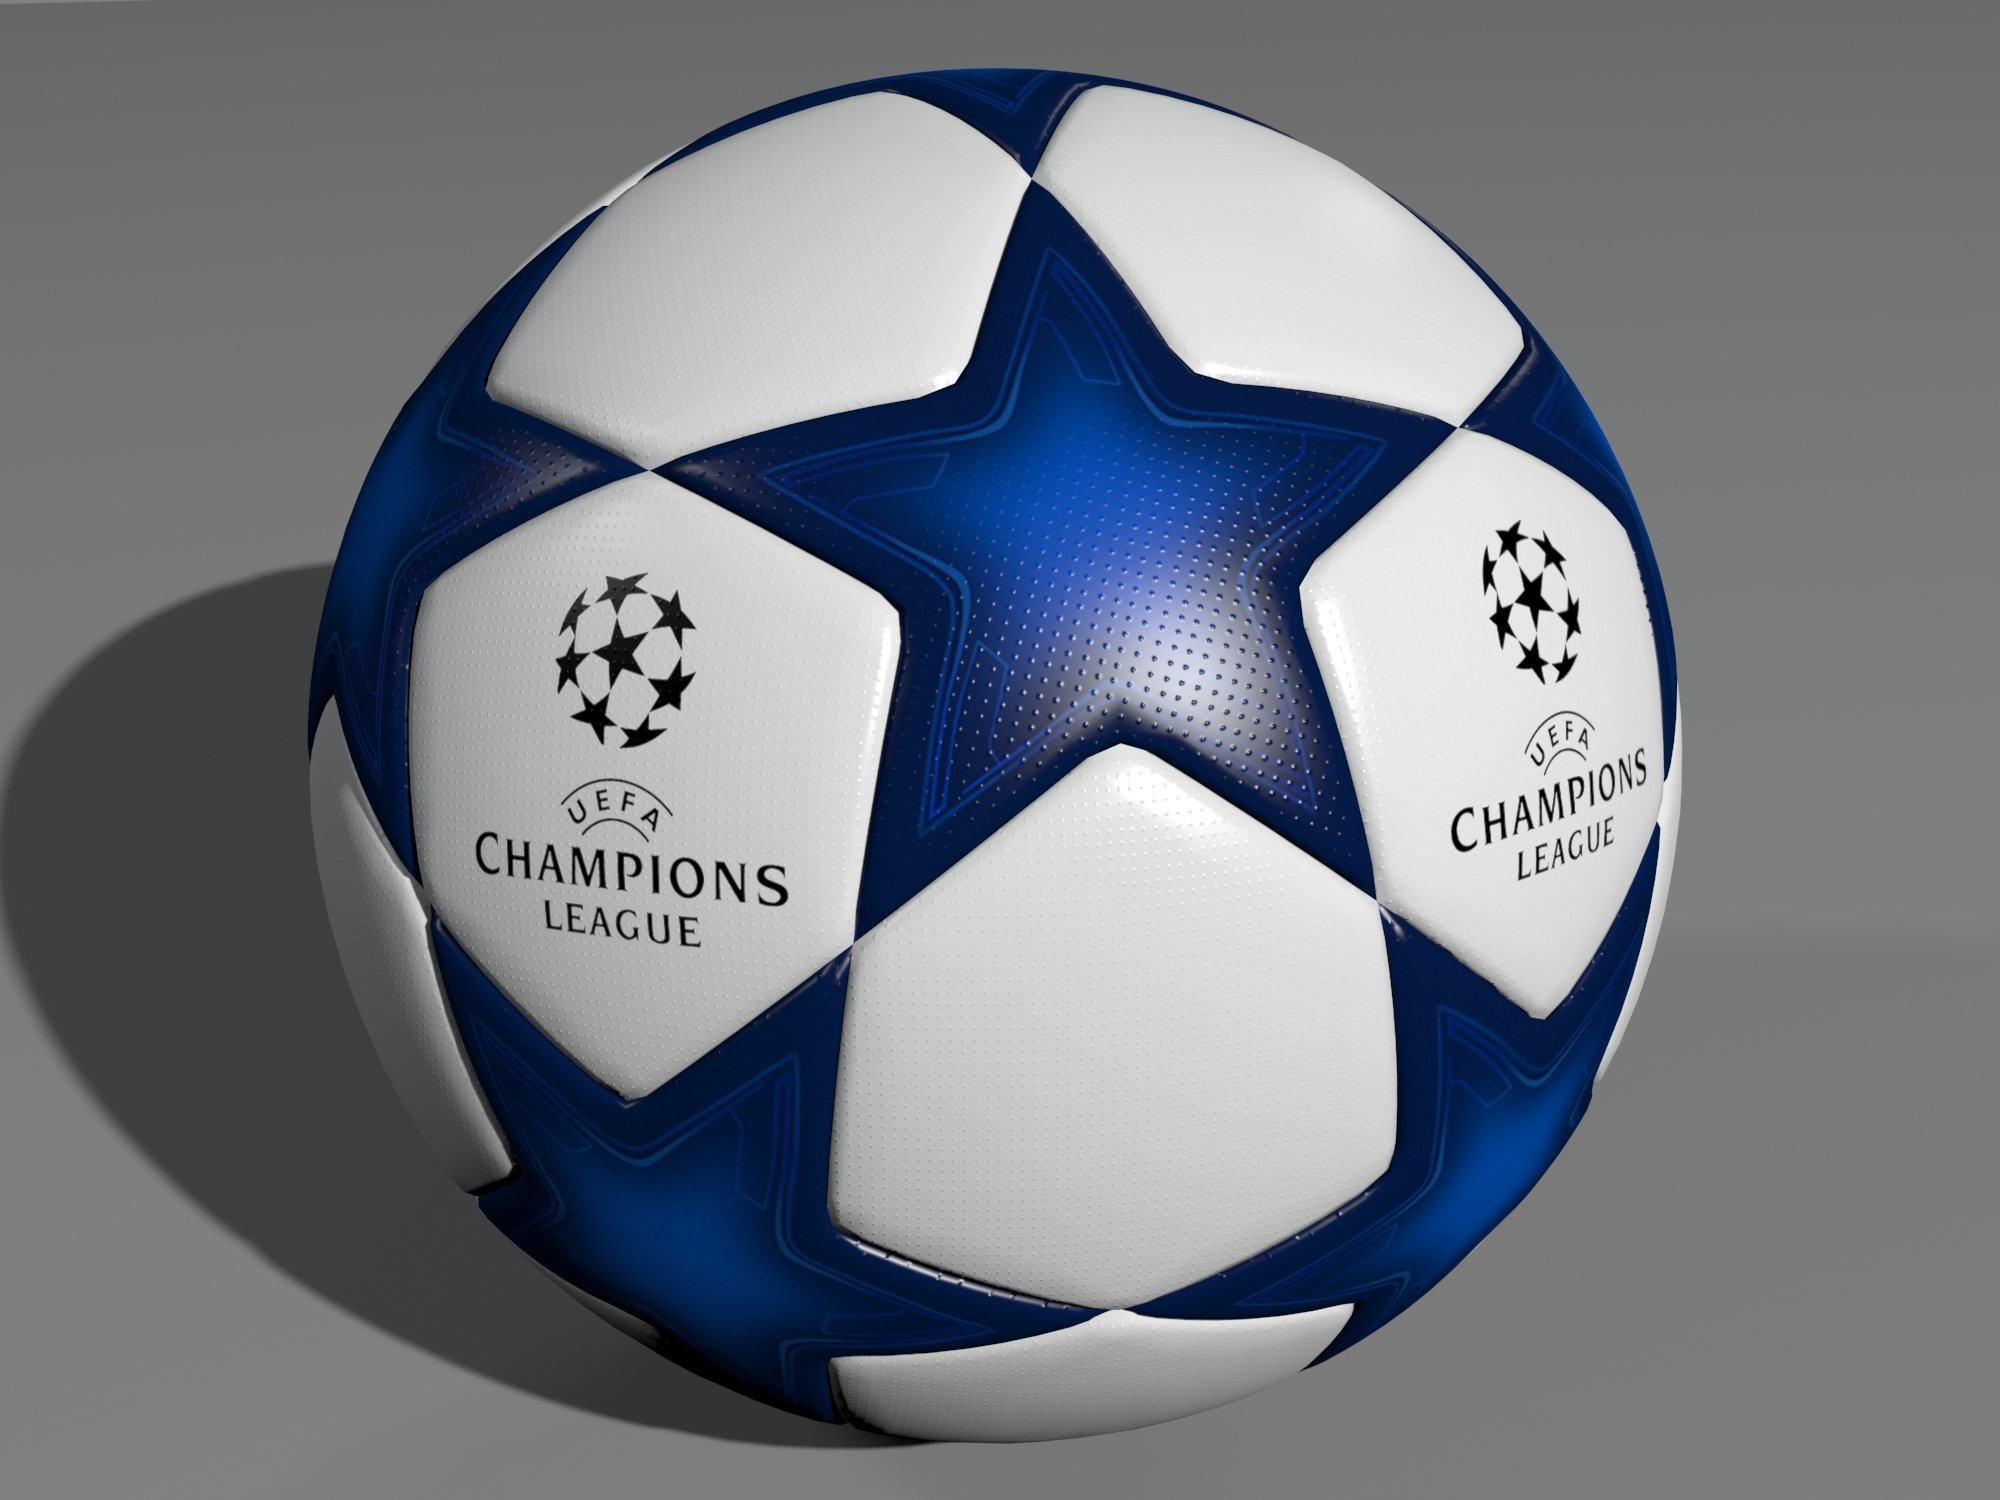 new champions league ball